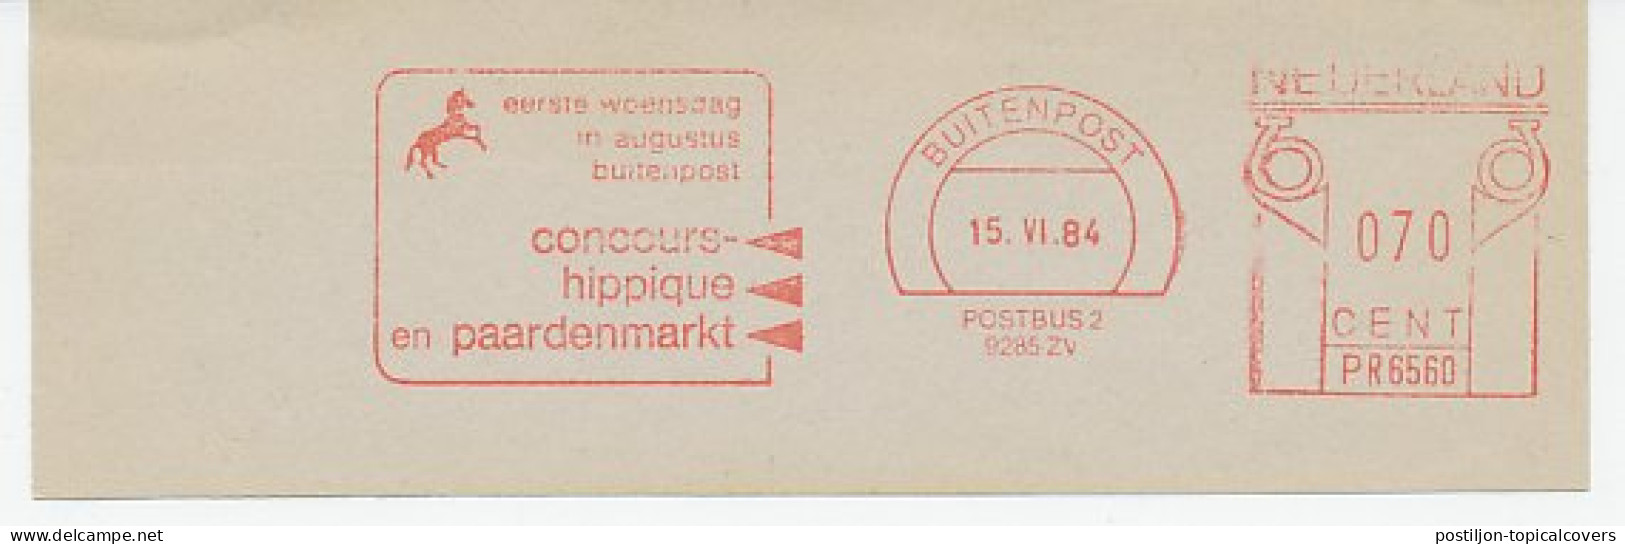 Meter Cut Netherlands 1984 Horse Contest - Horse Market - Concours Hippique - Paardensport